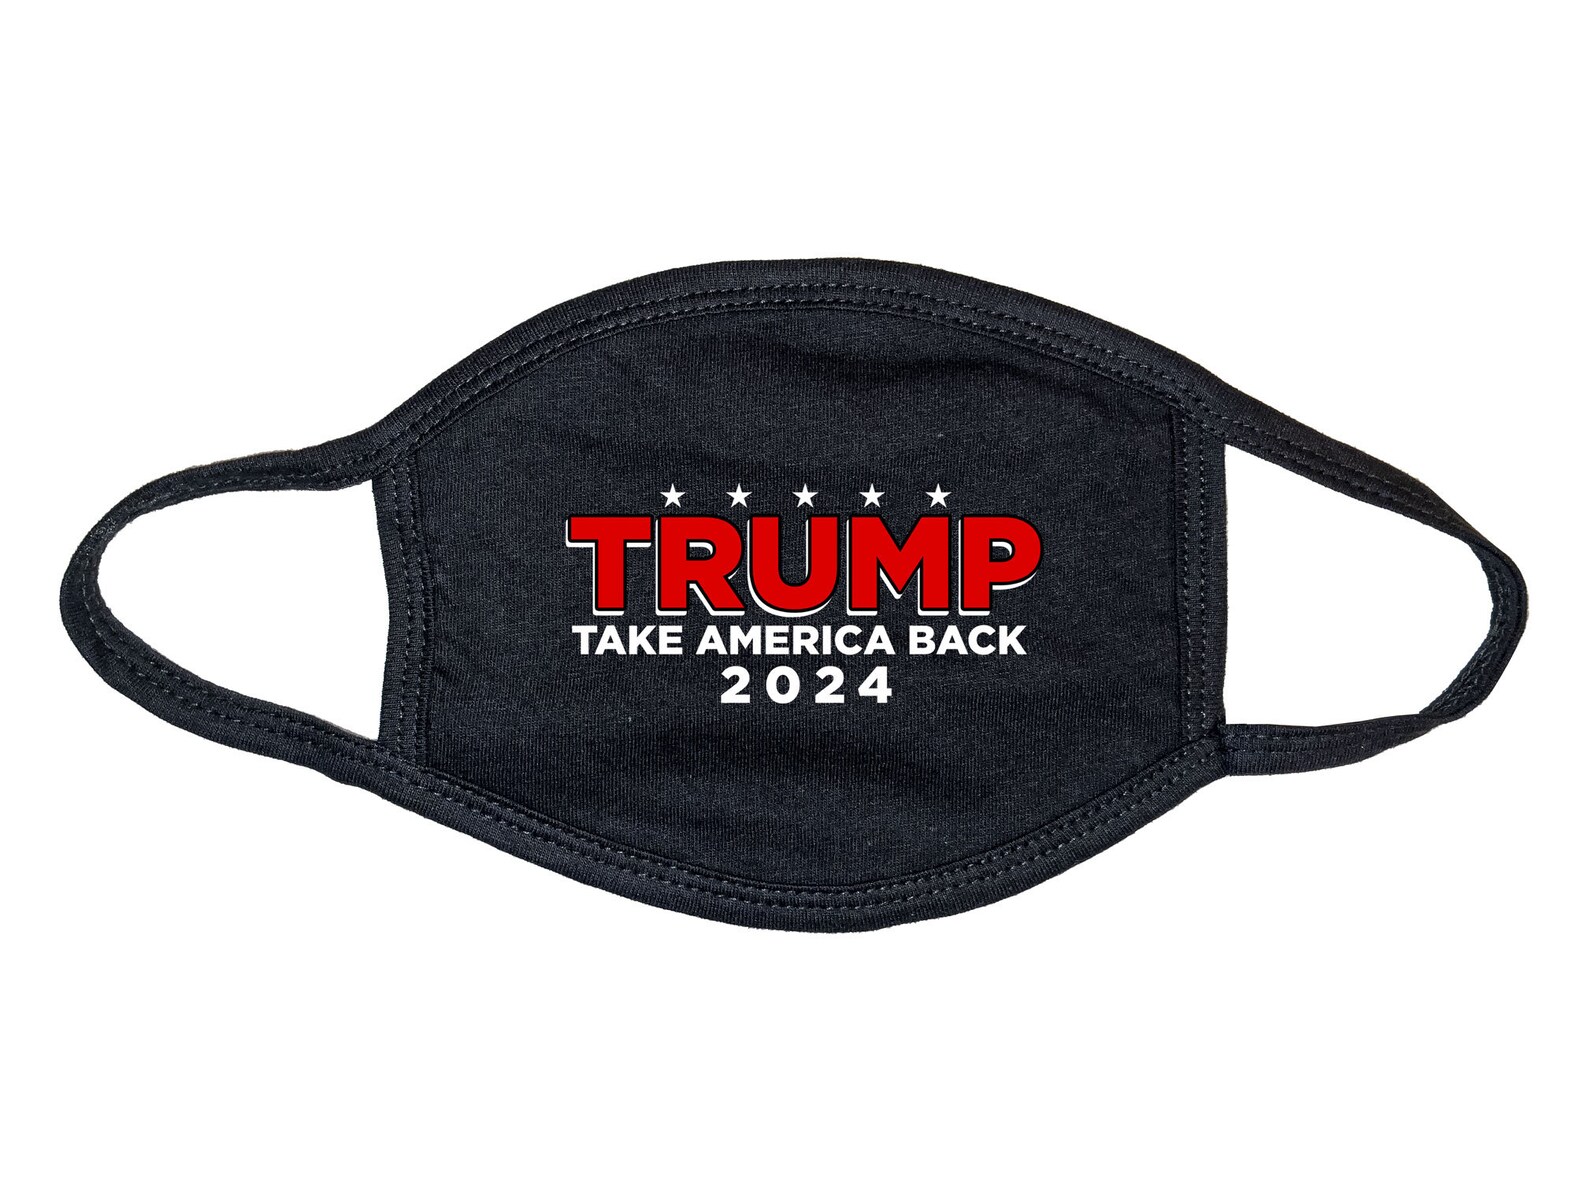 Take America back Donald Trump 2024 Mask 100 cotton 2 ply Etsy